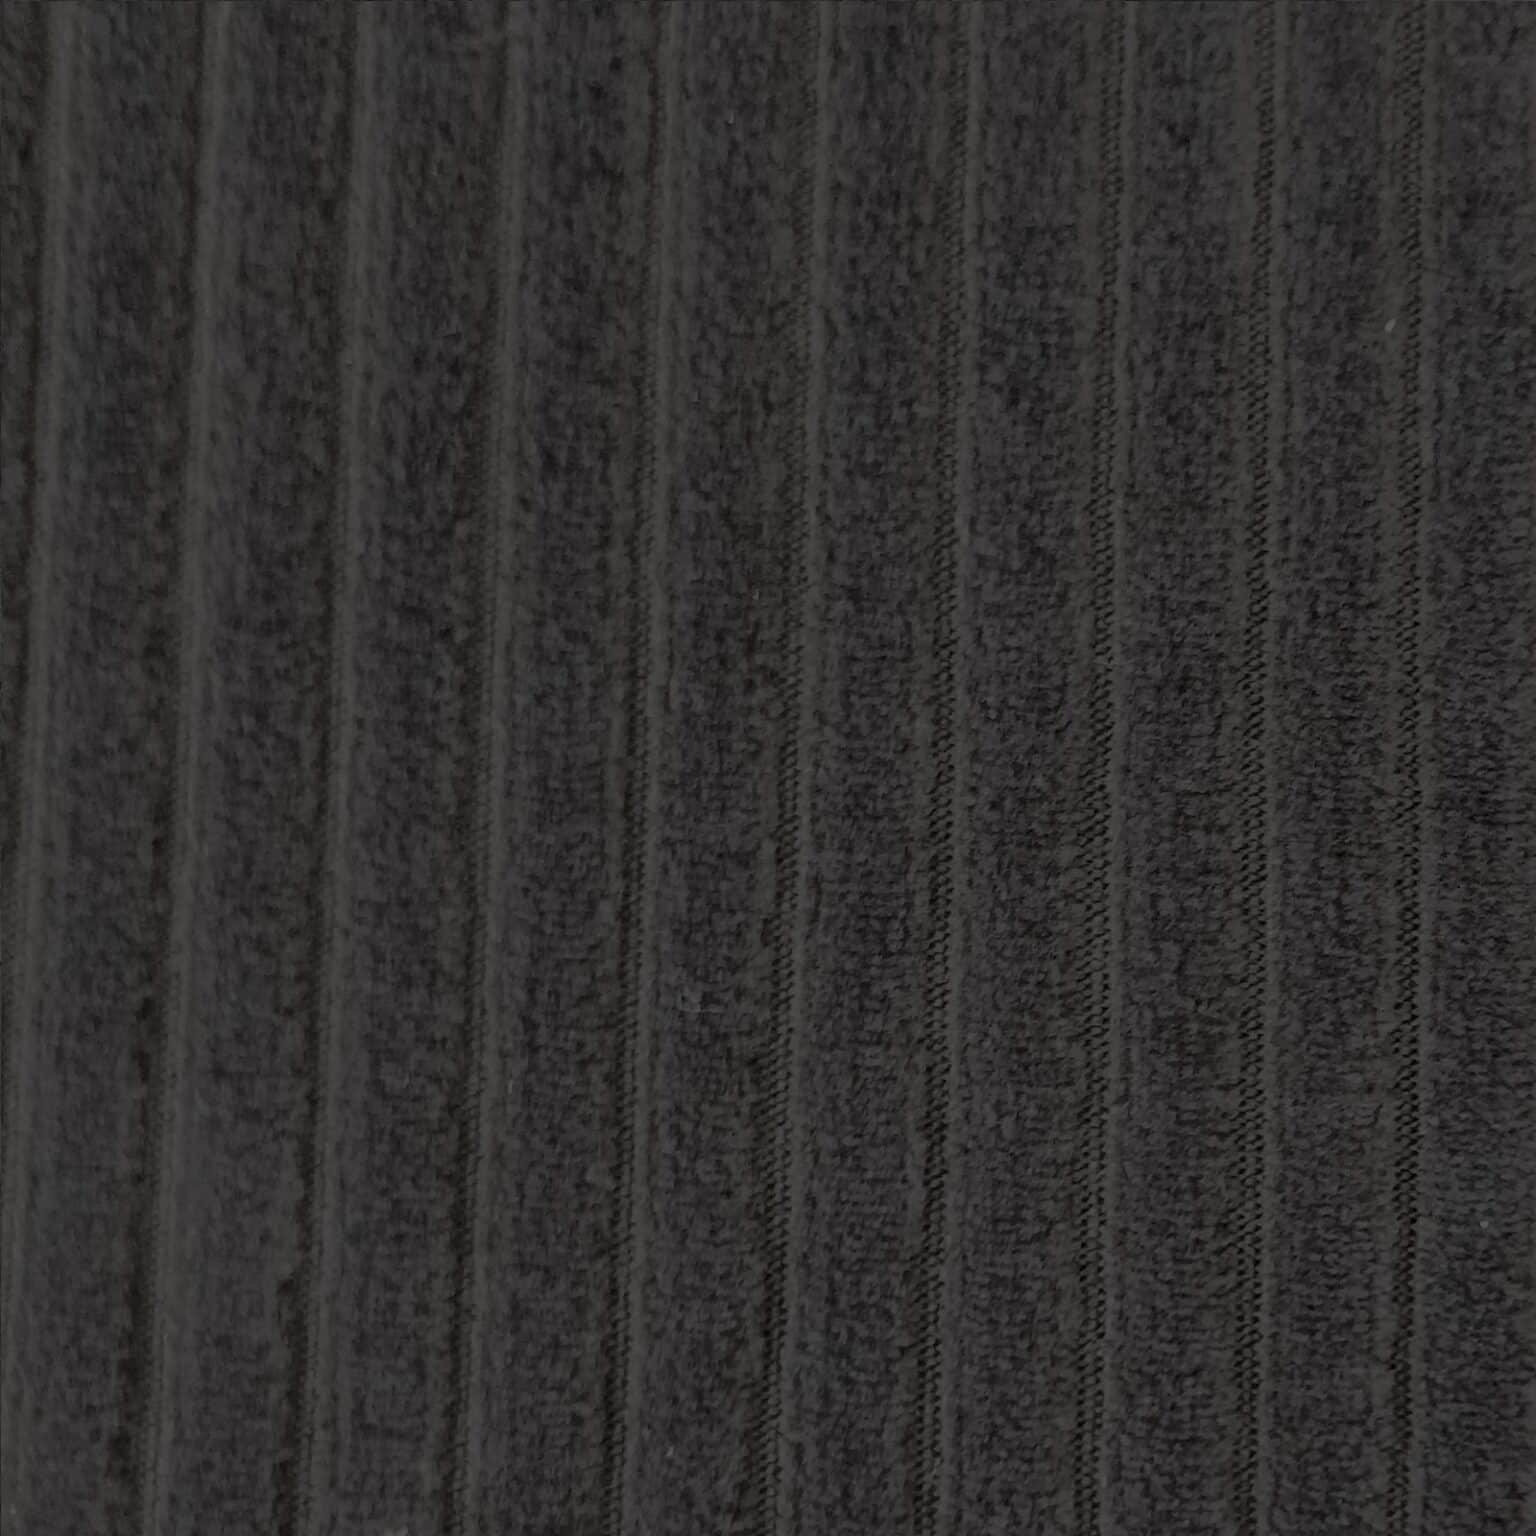 Nicky Jumbo Cord Jersey Fabric - Black - 150cm Wide